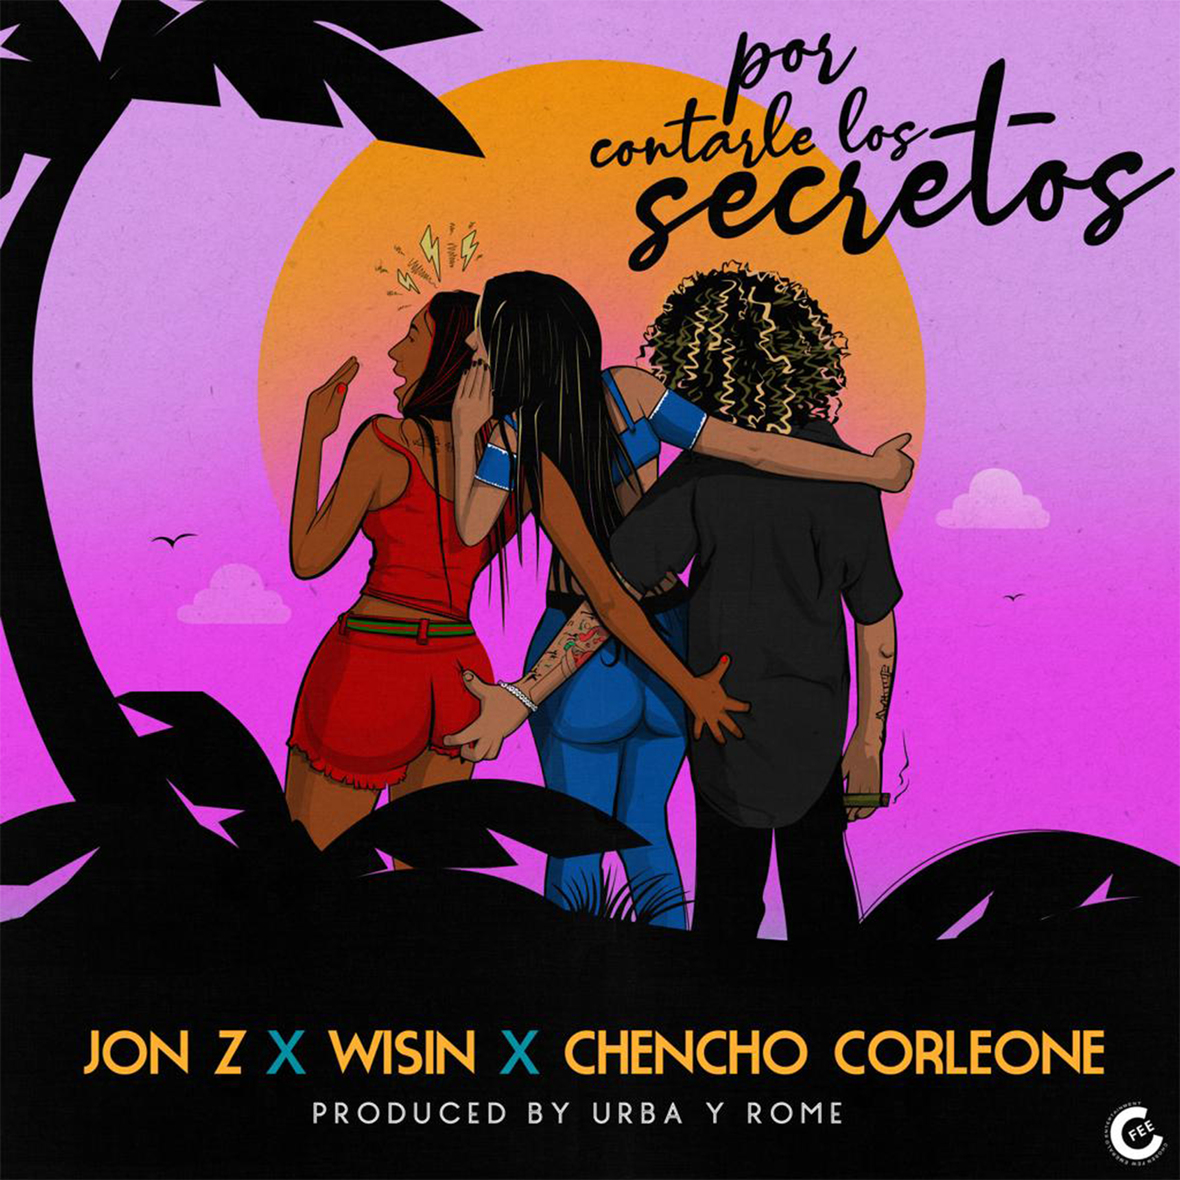 Jon Z X Wisin X Chencho Corleone - Por Contarle Los Secretos 3000